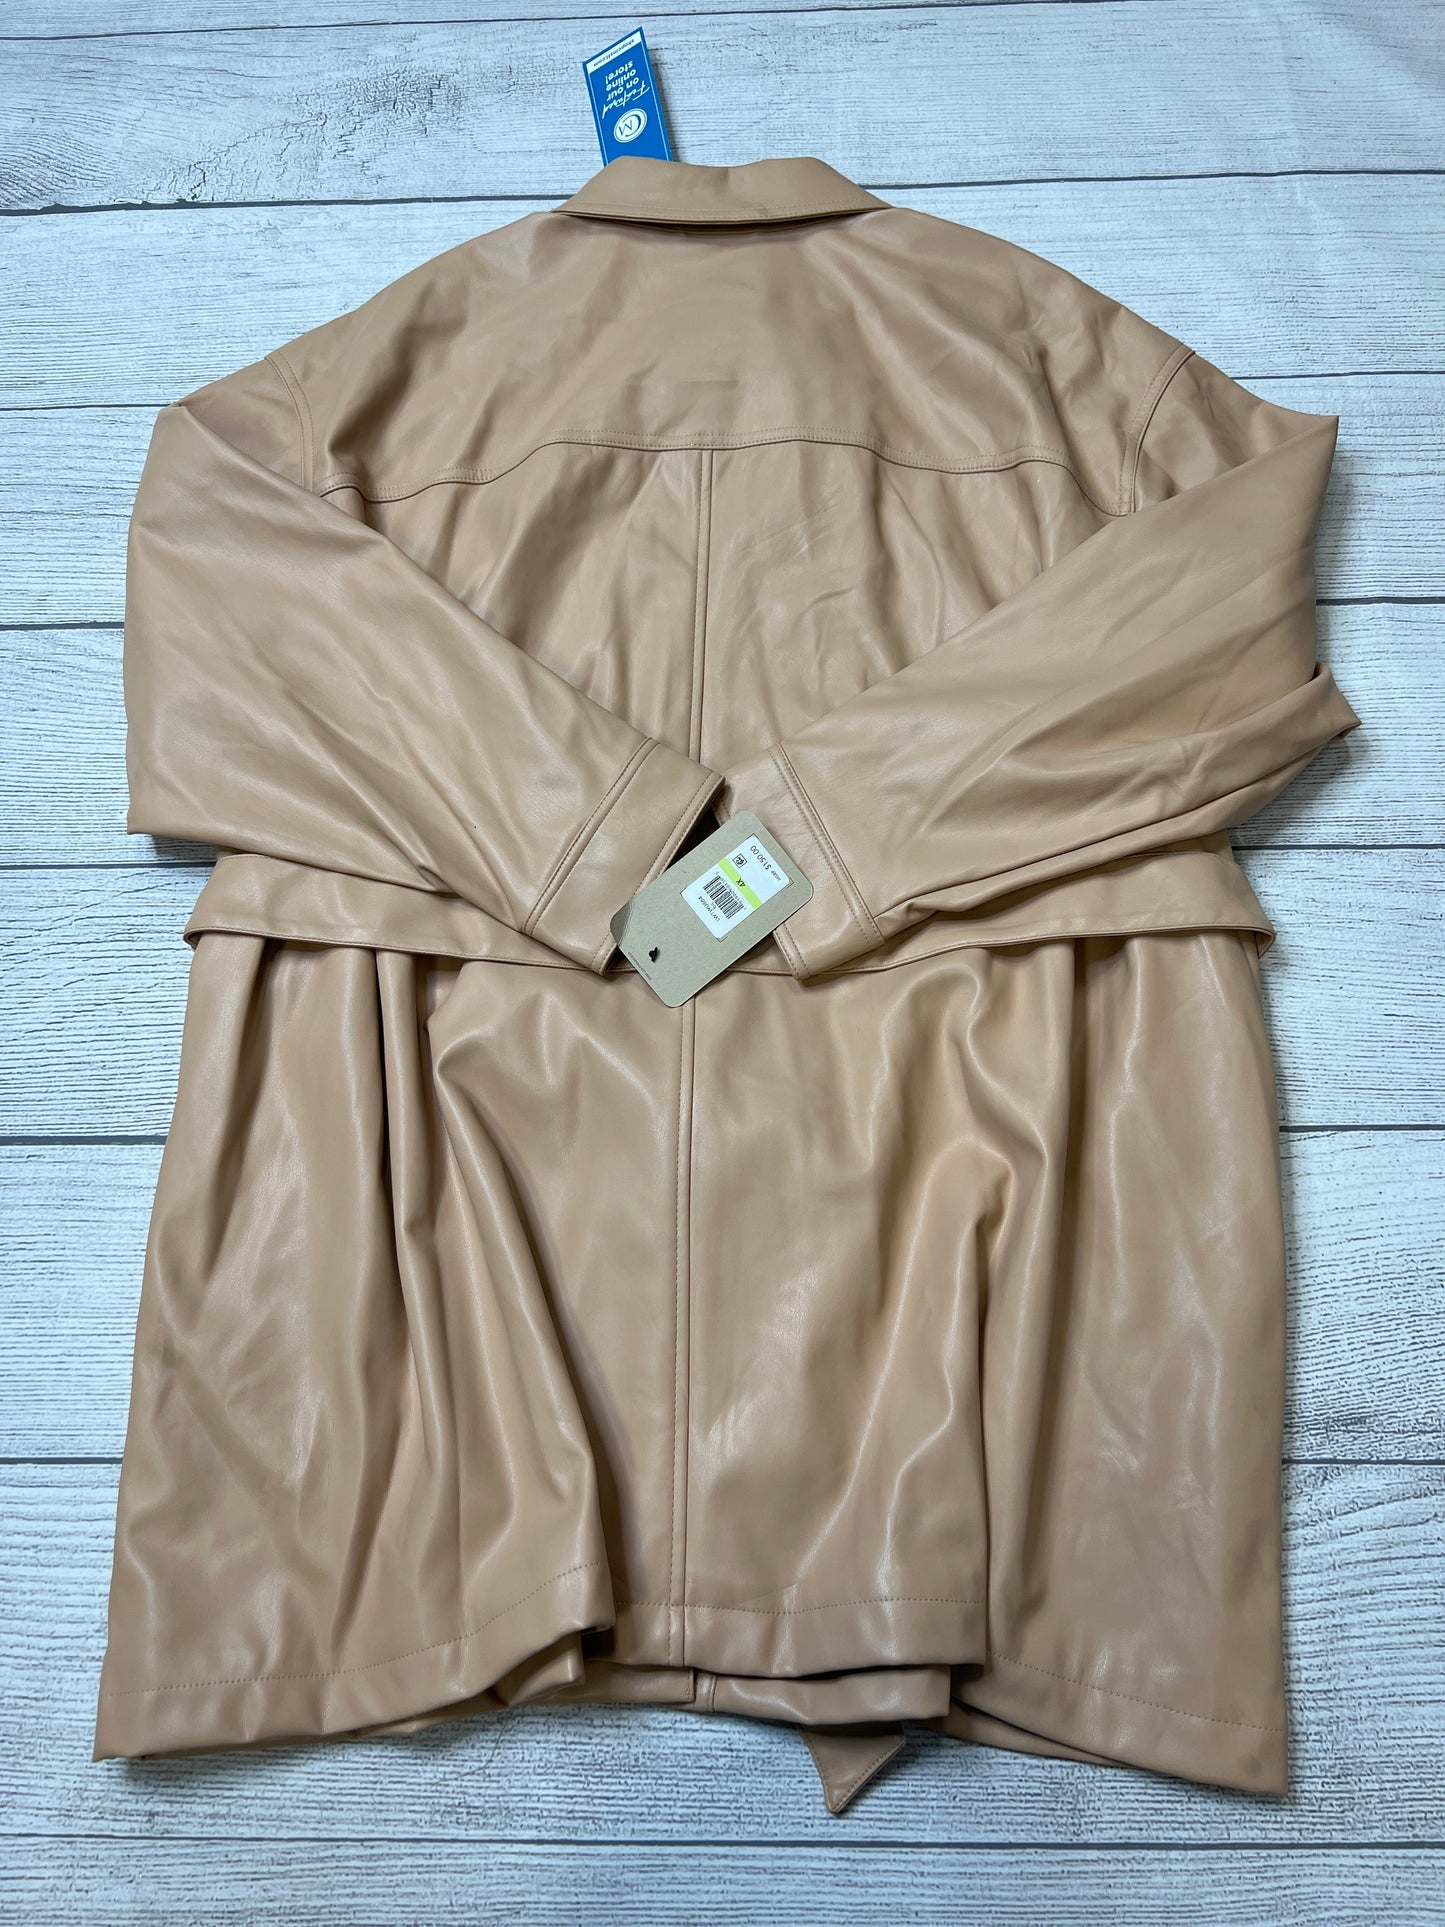 Coat / Trenchcoat By Levis  Size: 4x